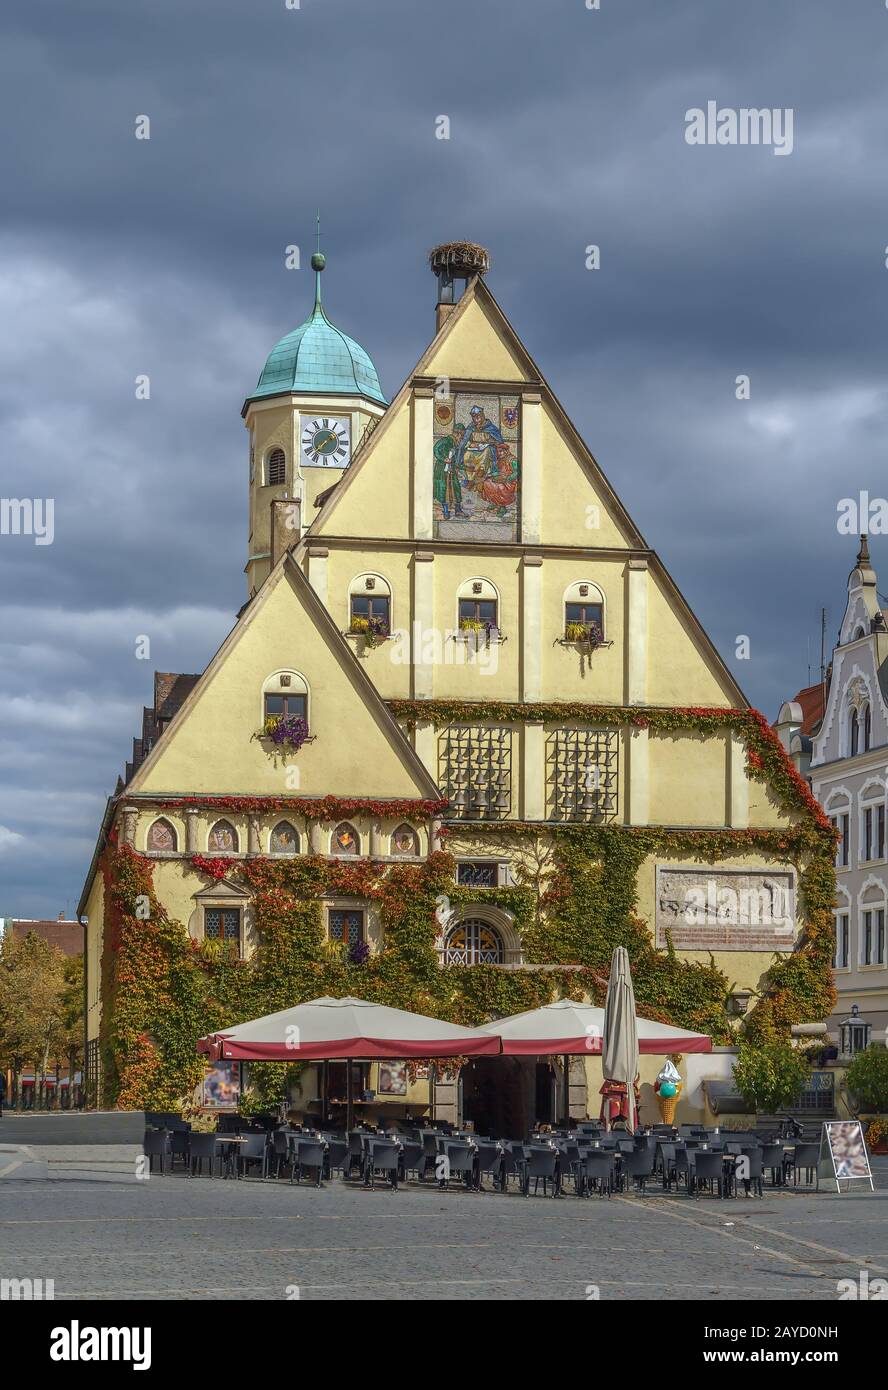 Old Town Hall, Weiden in der Oberpfalz, Germany Stock Photo